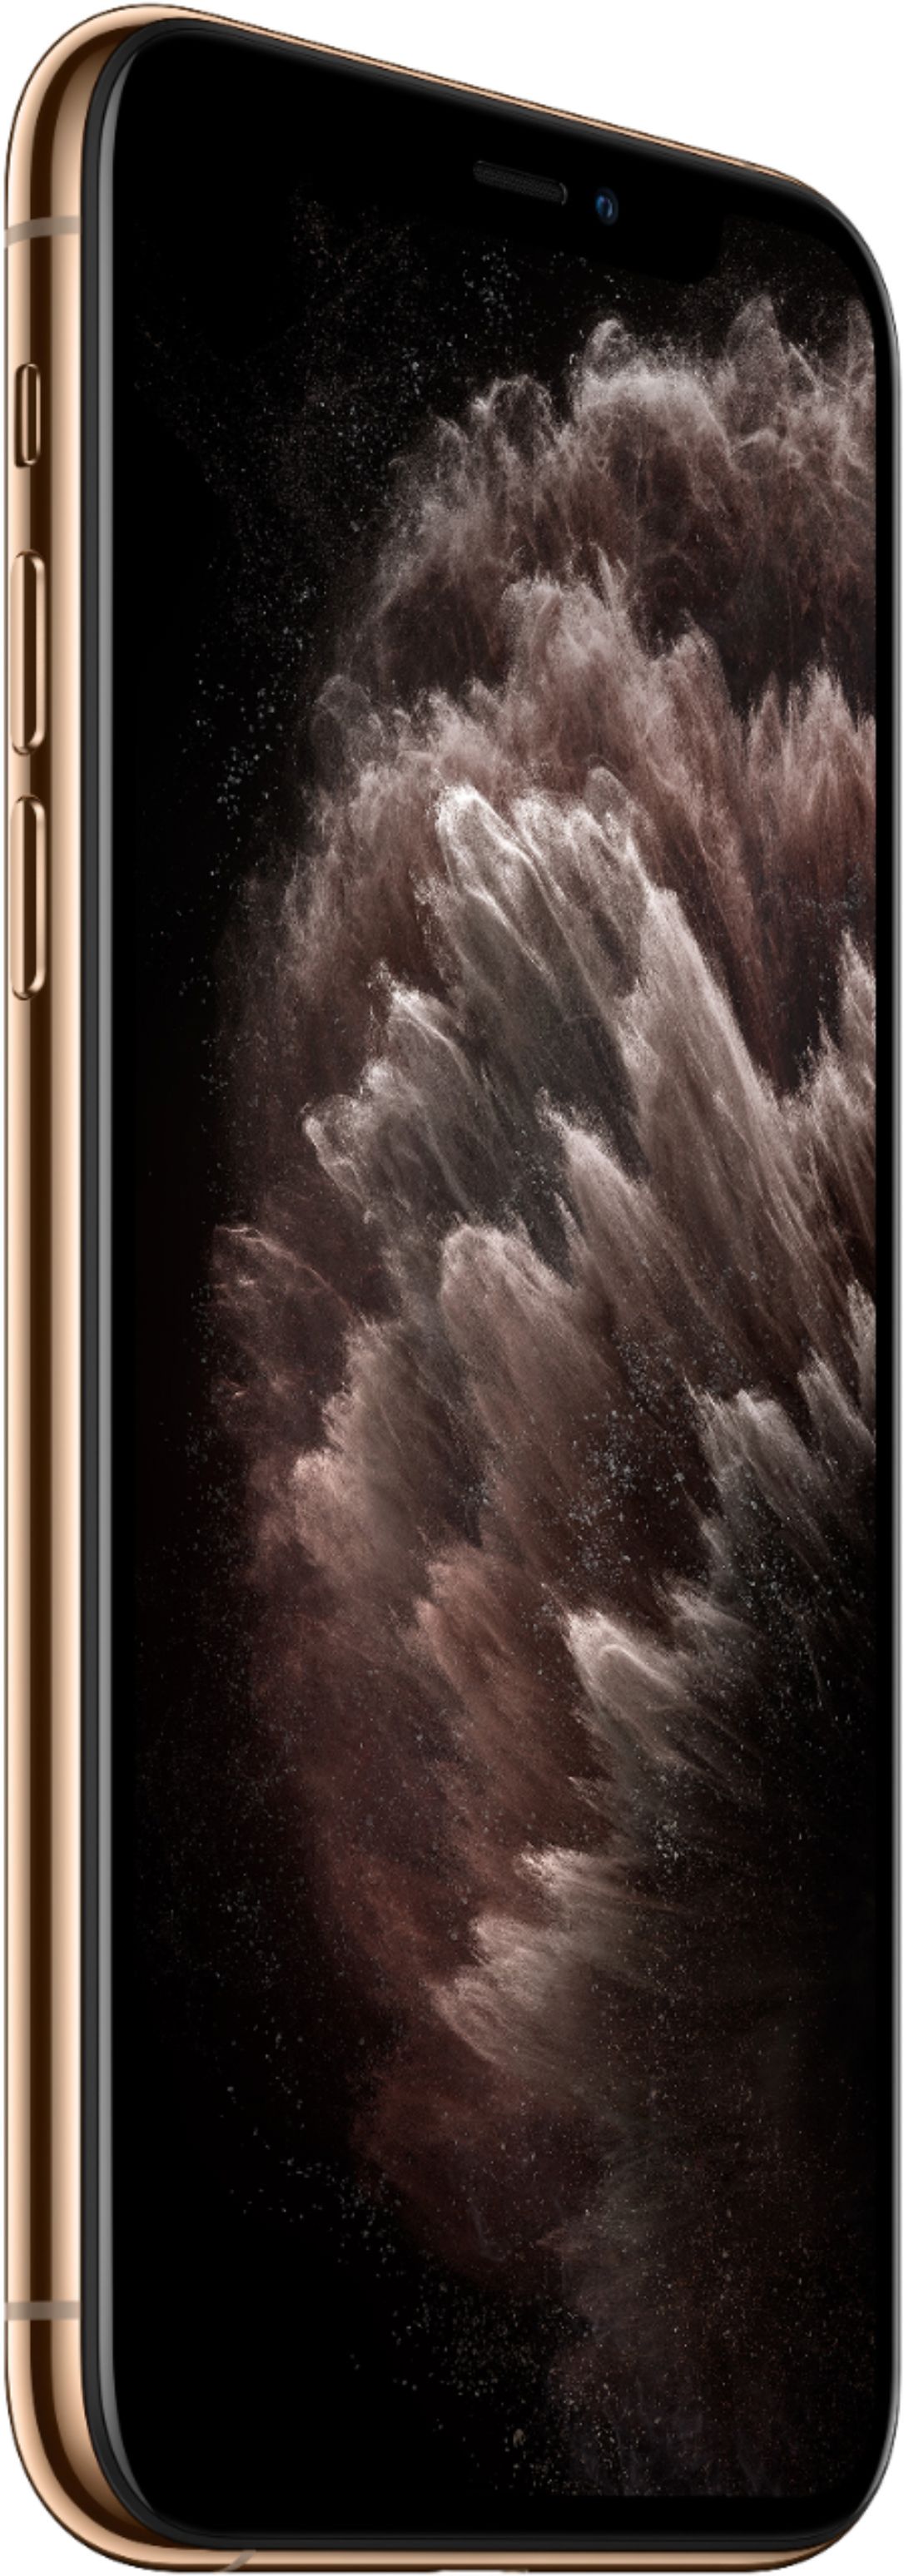 Best Buy: Apple iPhone 11 Pro 256GB Gold (Verizon) MWCP2LL/A